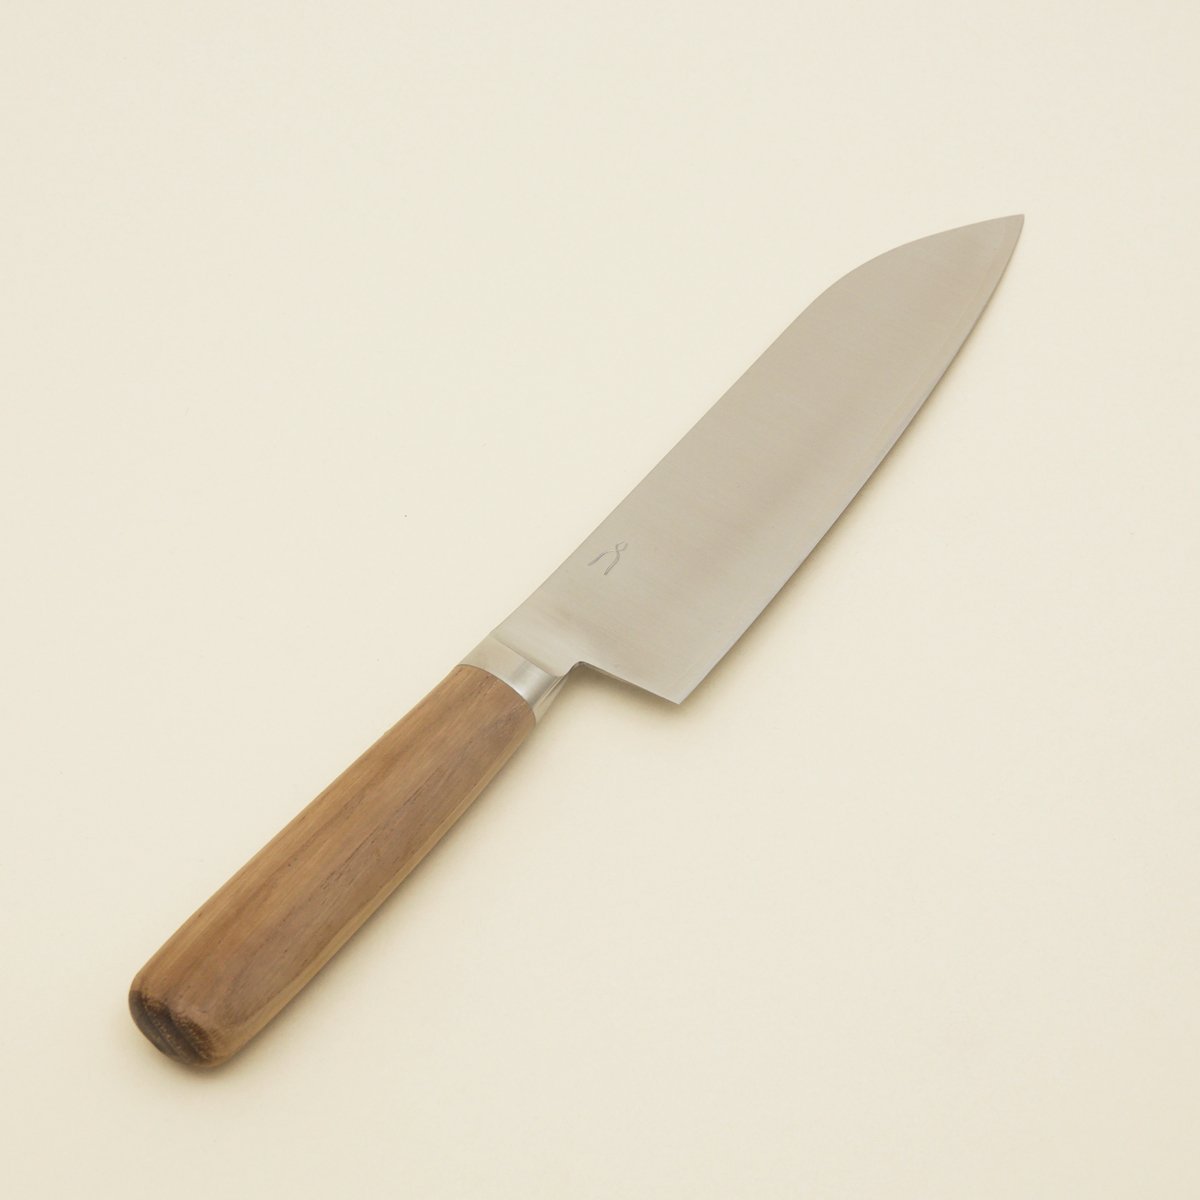 Japanese Santoku Knife